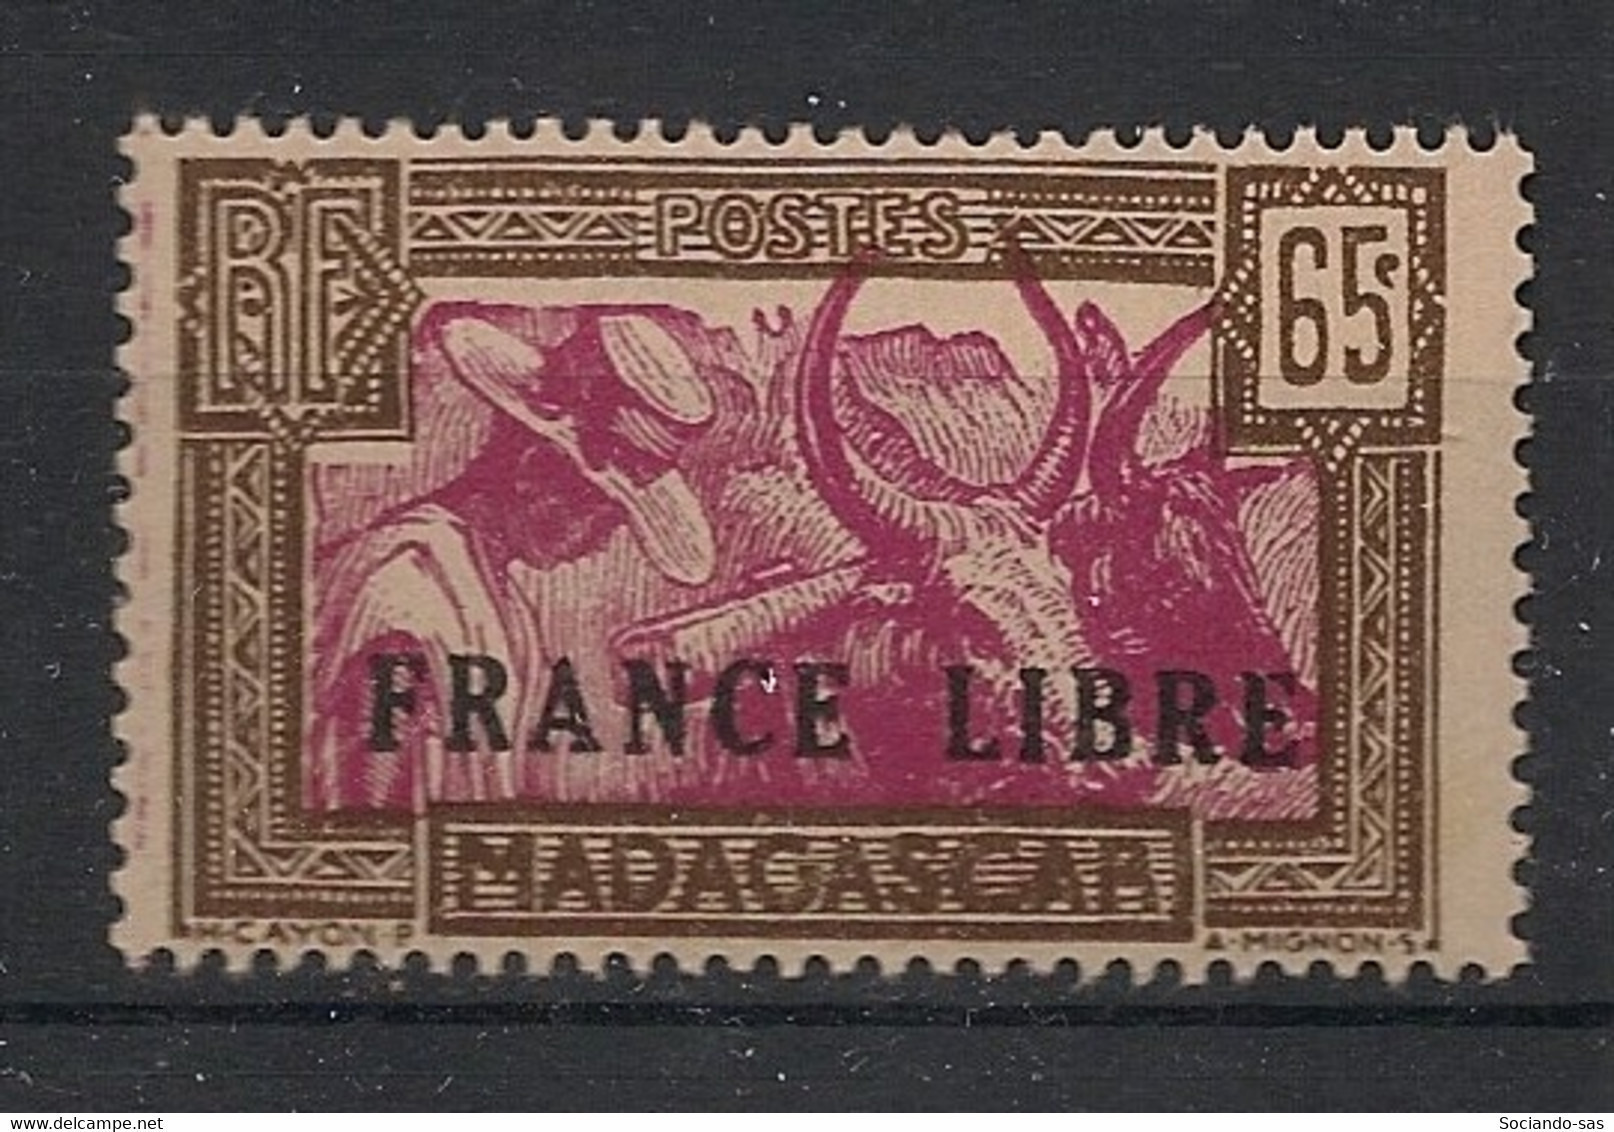 MADAGASCAR - 1942 - N°YT. 236 - France Libre - Neuf GC** / MNH / Postfrisch - Unused Stamps